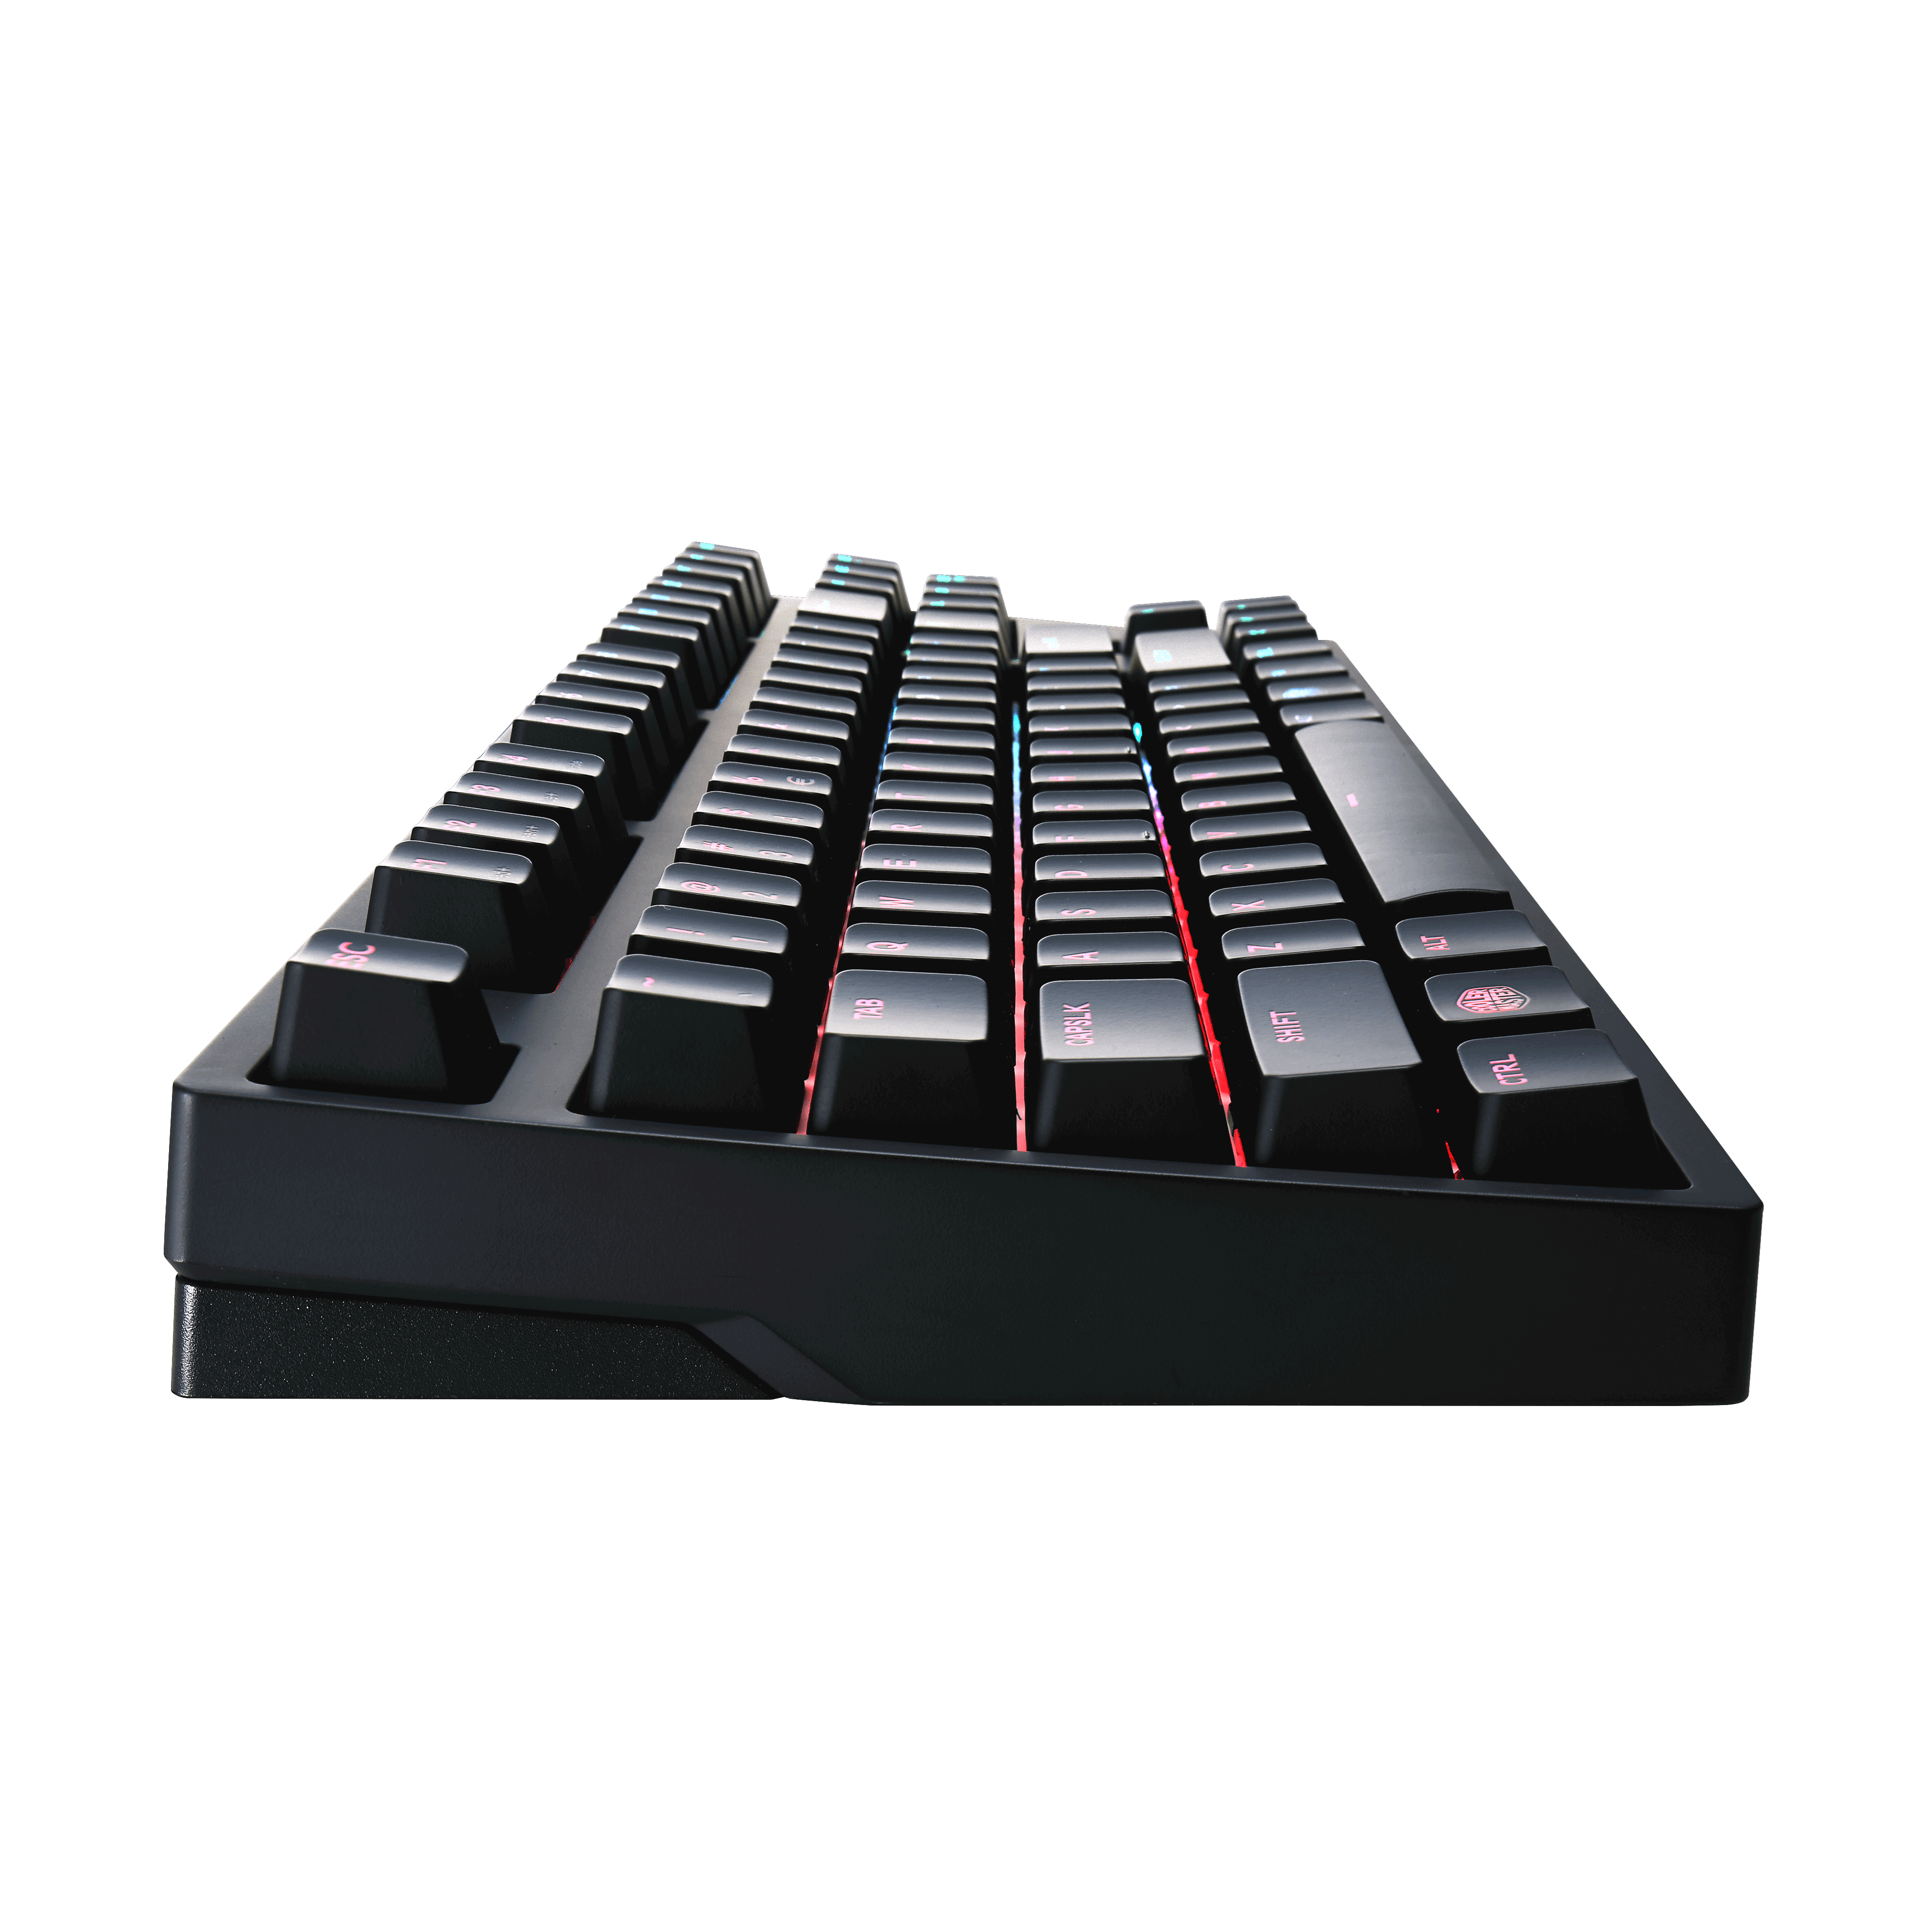 Cooler Master clavier gaming Gunmetal/Noir, Layout DE, TTC Low Profile RGB  Red